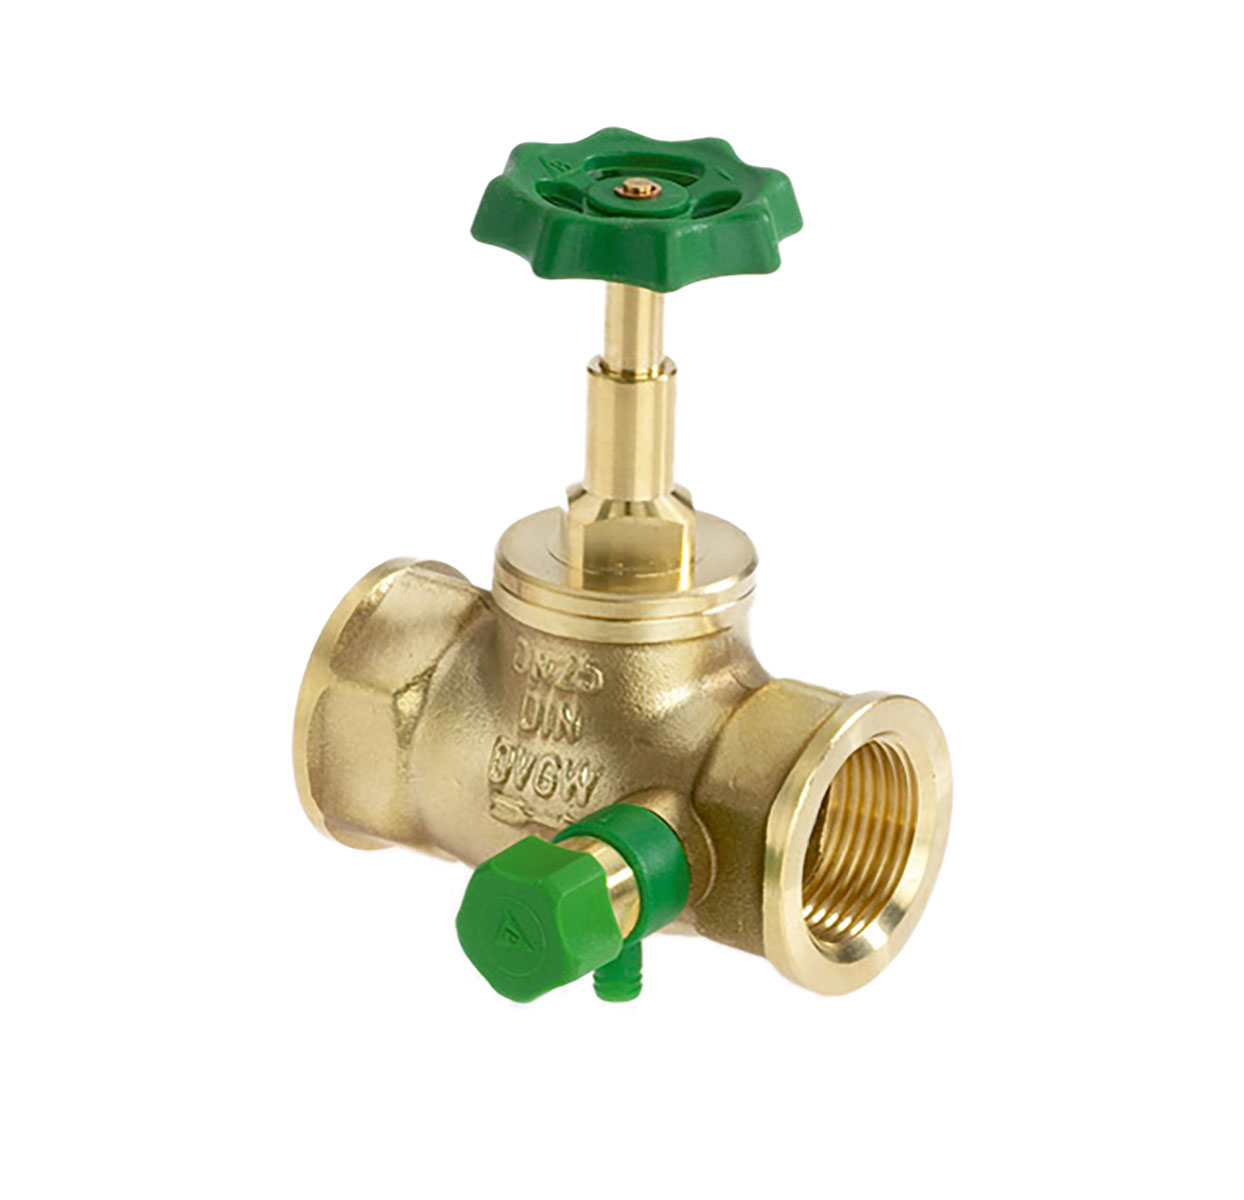 1304400 - CR-Brass Globe valve with drain valve, rising